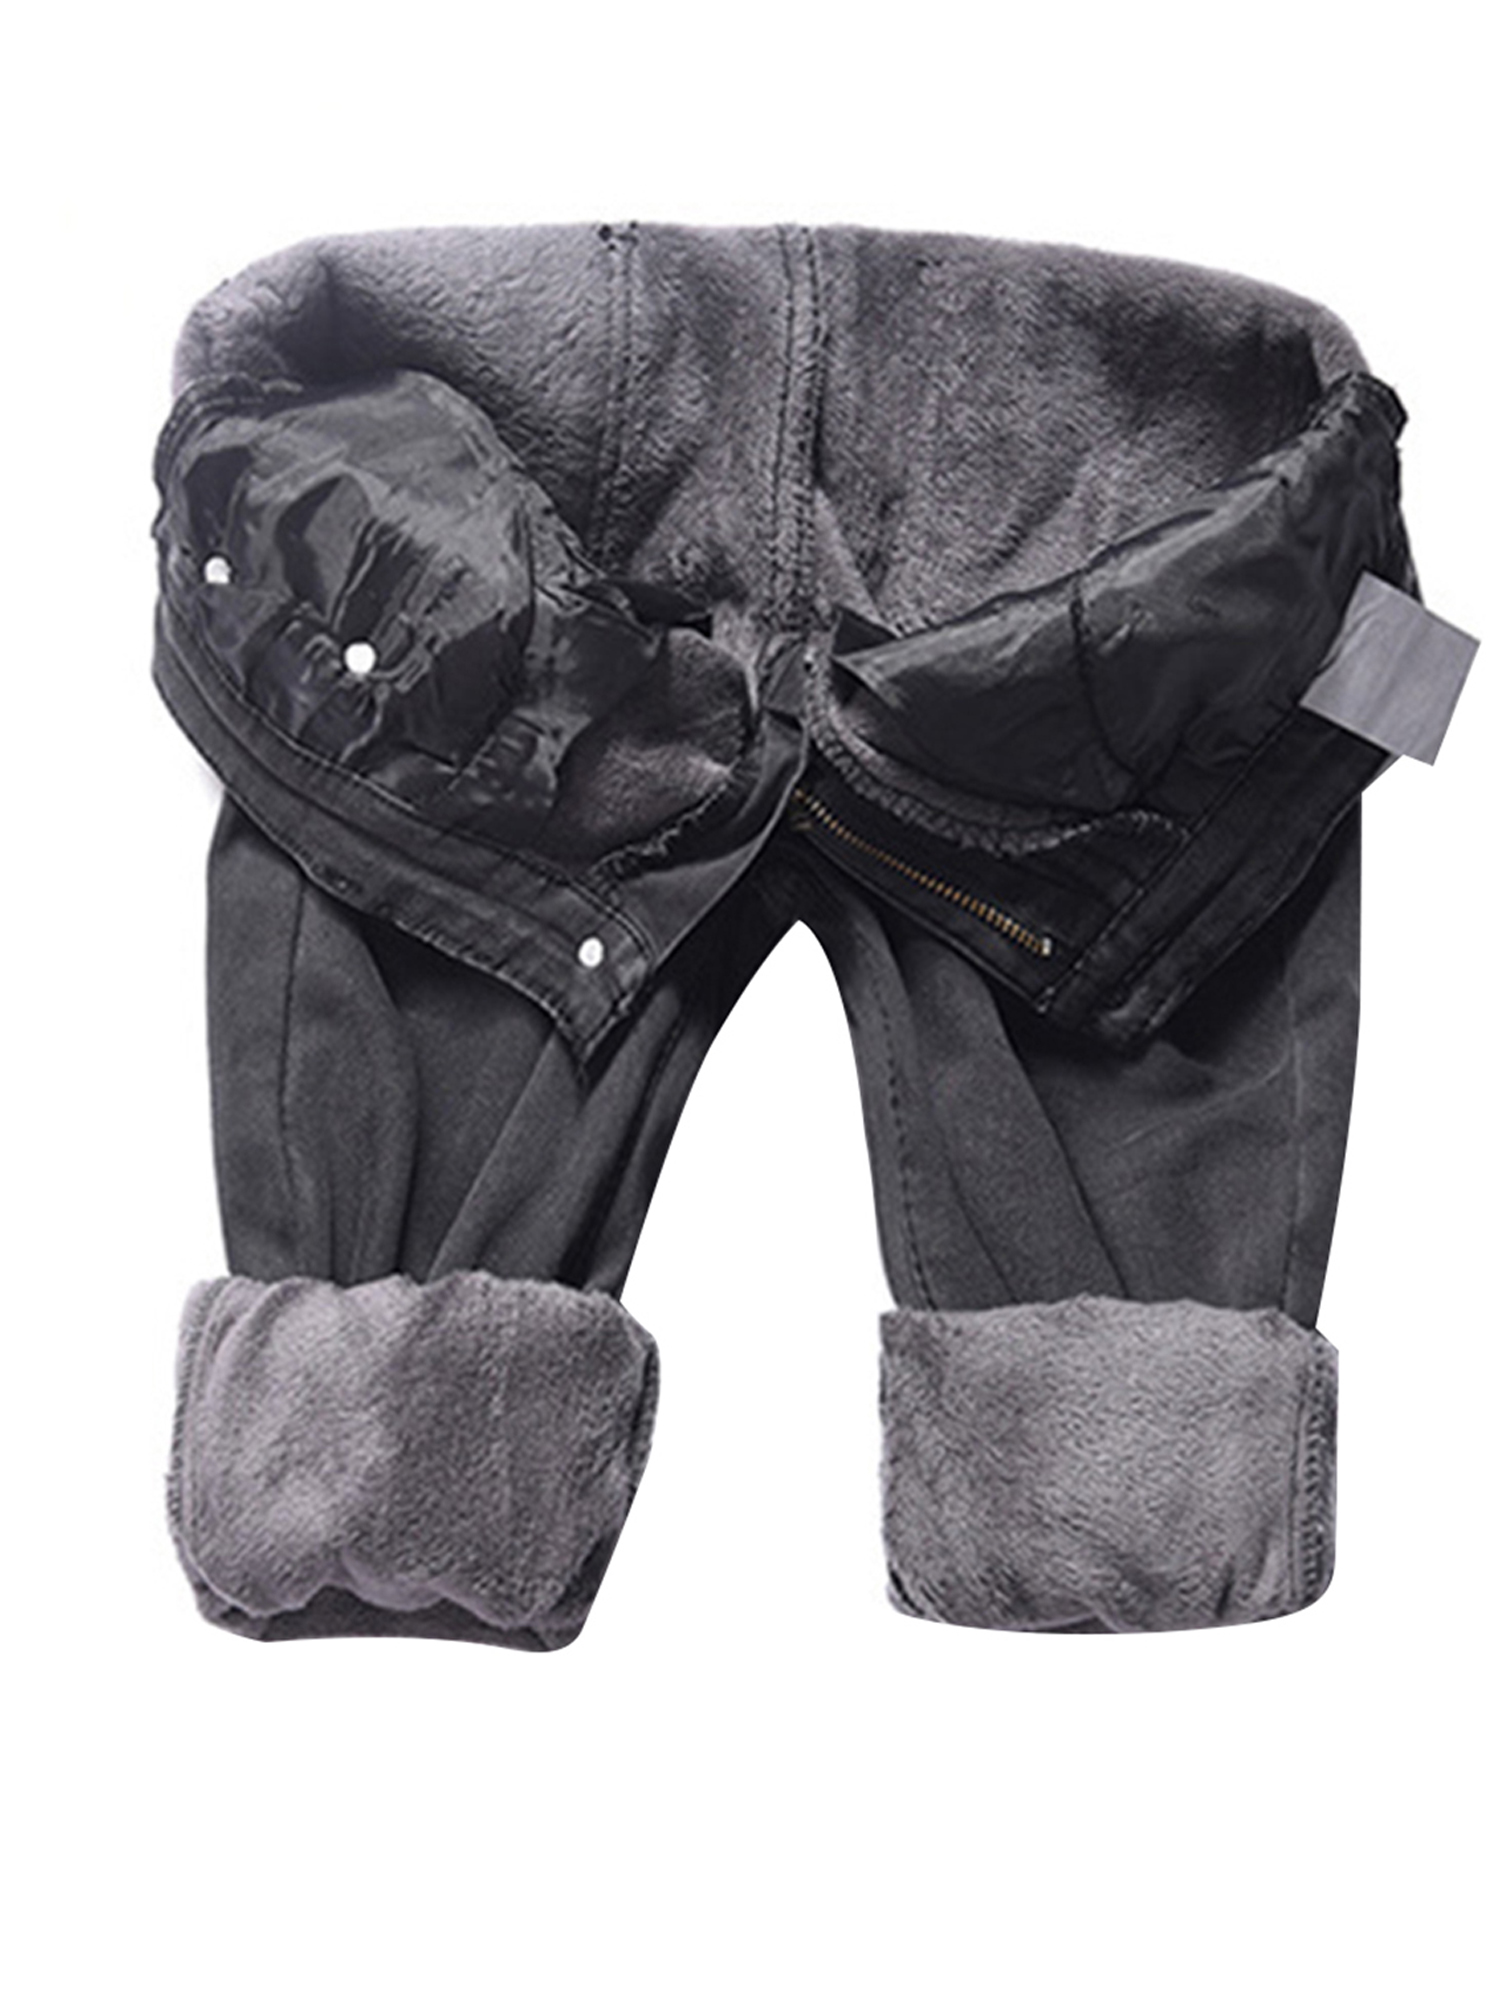 Listenwind Womens Warm Fleece Lined Jeans Stretch Skinny Winter Thick Jeggings Denim Long Pants Gray - image 1 of 6